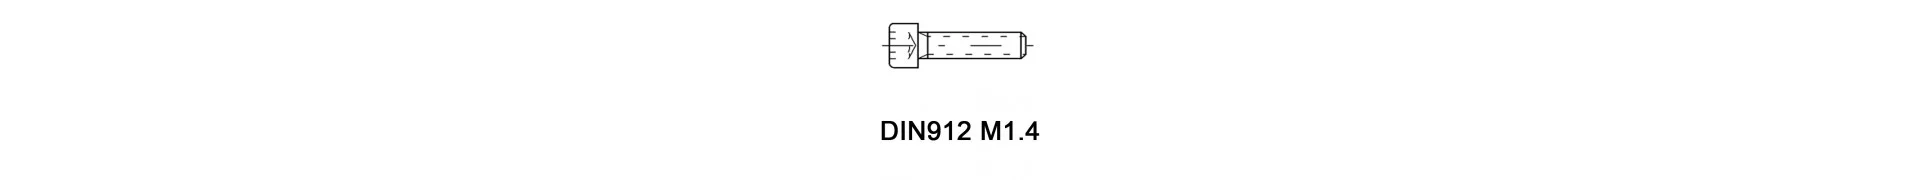 DIN912 M1.4